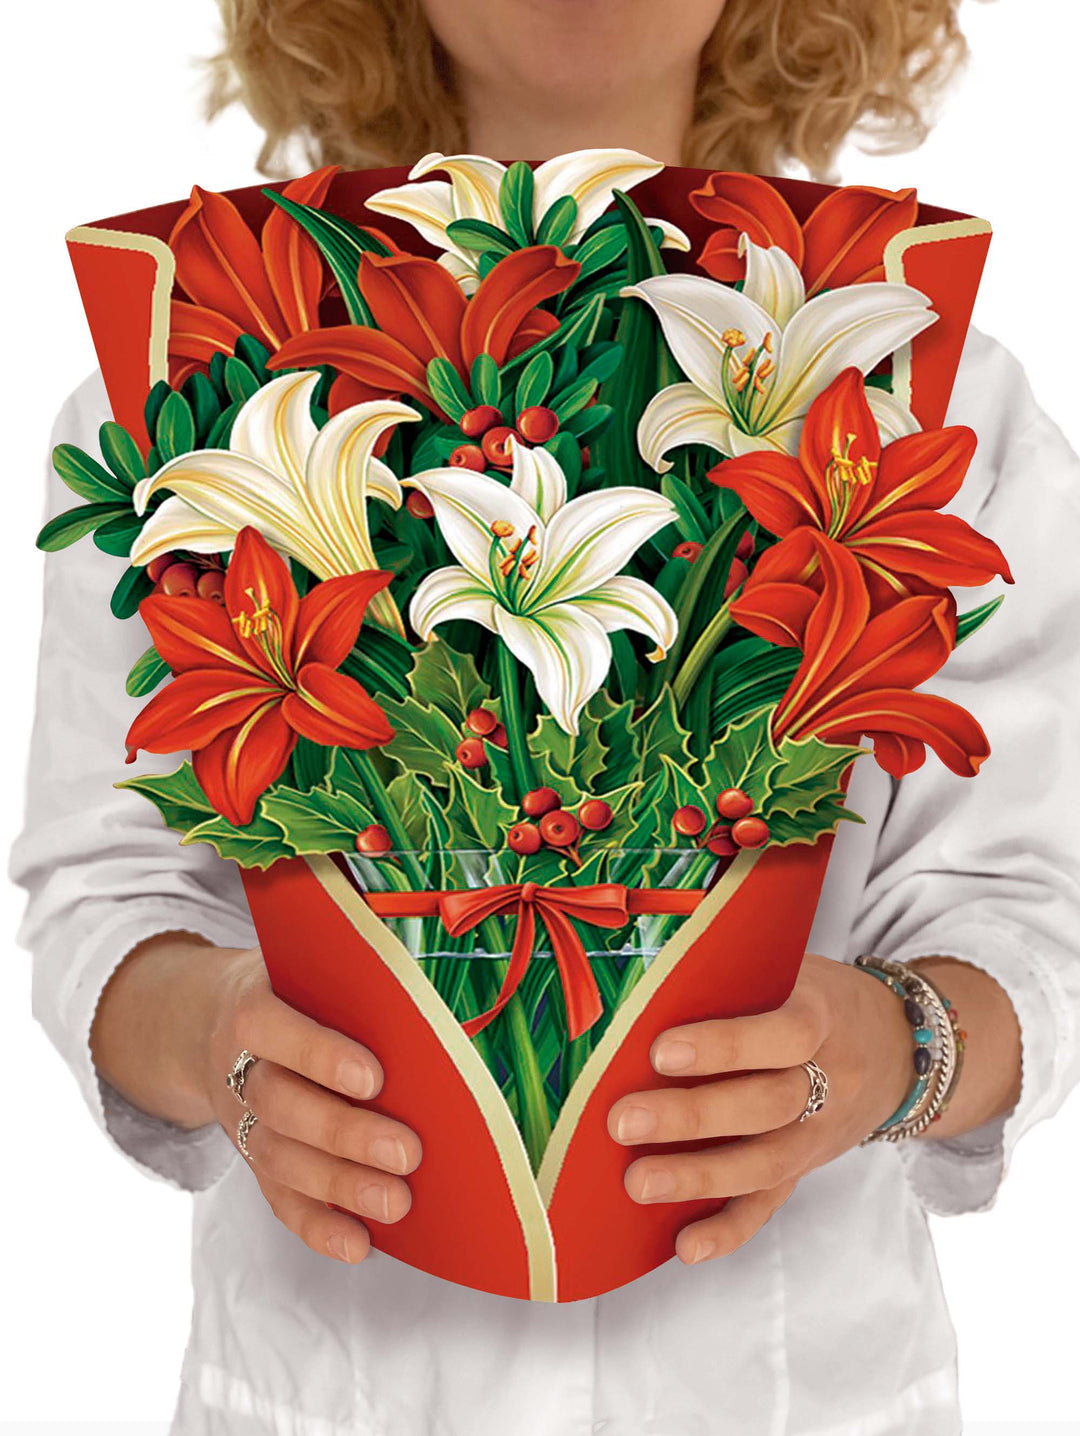 FreshCut Paper Pop-Up Red Amaryllis Bouquet